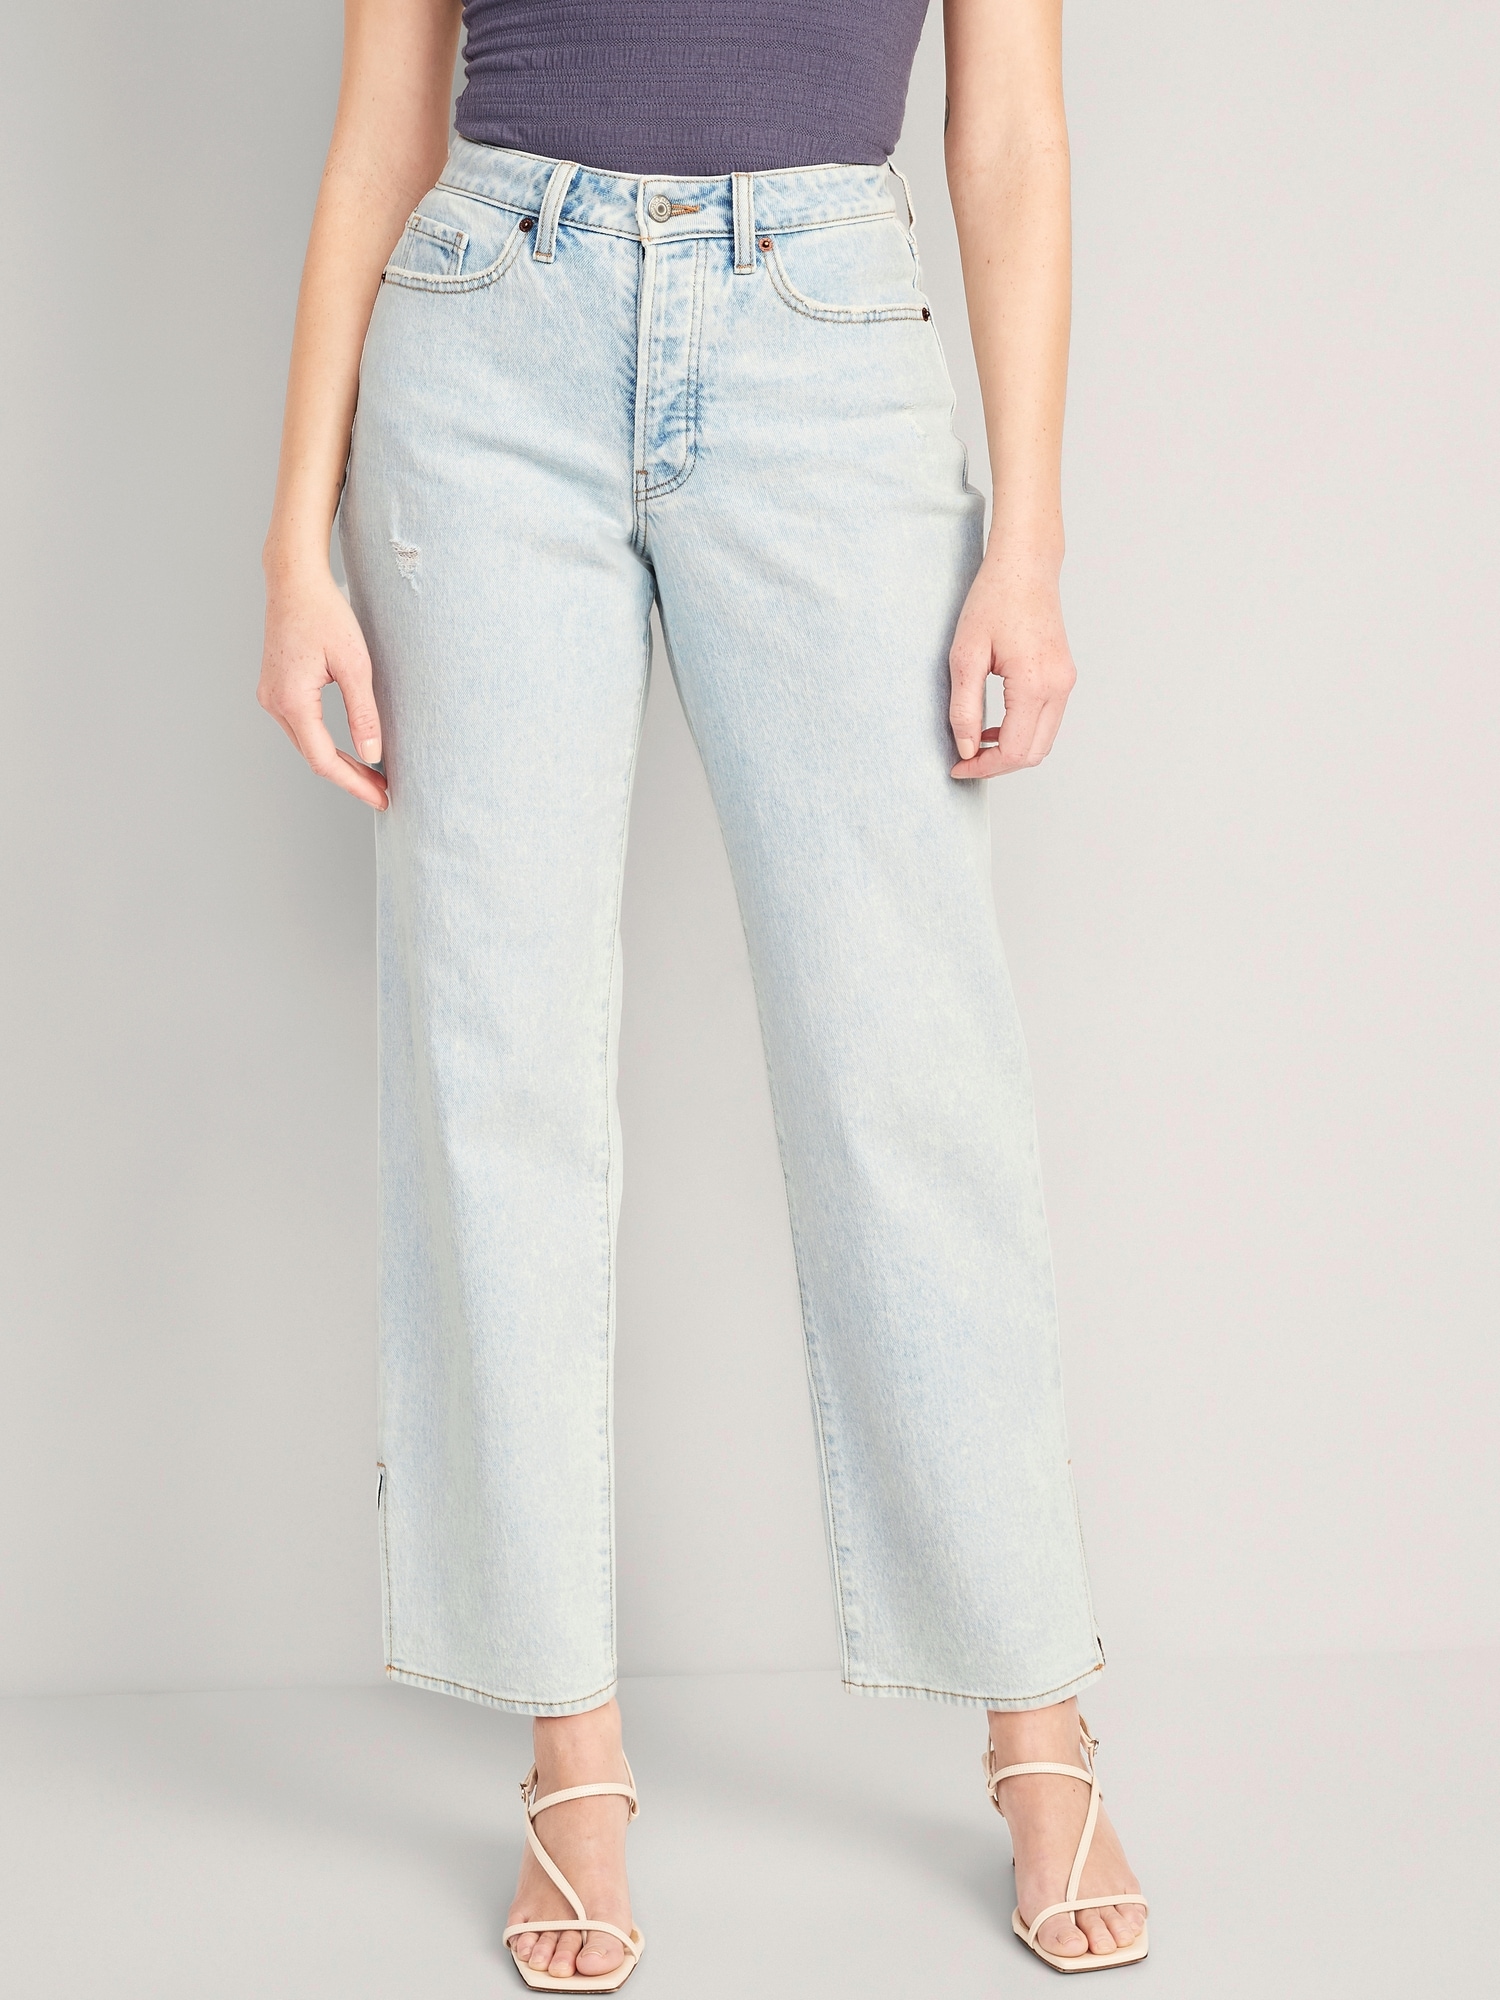 Curvy Button-Fly High-Waisted OG Loose Side-Split Jeans